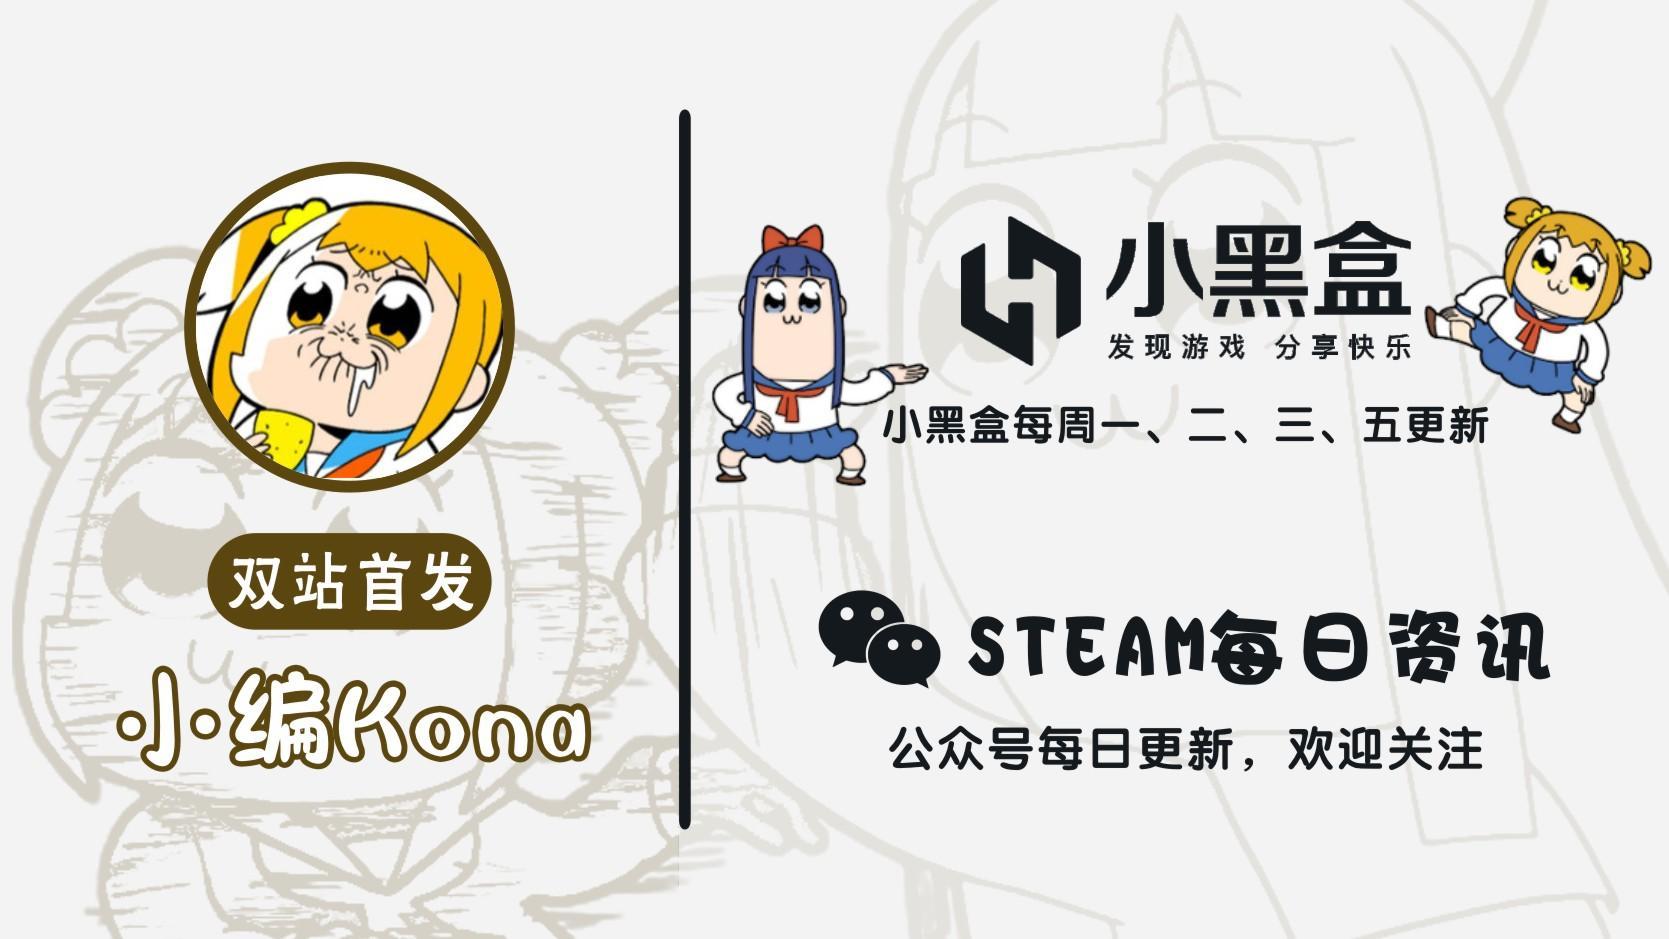 Steam一周特惠游戏推荐：瞬光斩黯黮，昭明破晦夜 13%title%